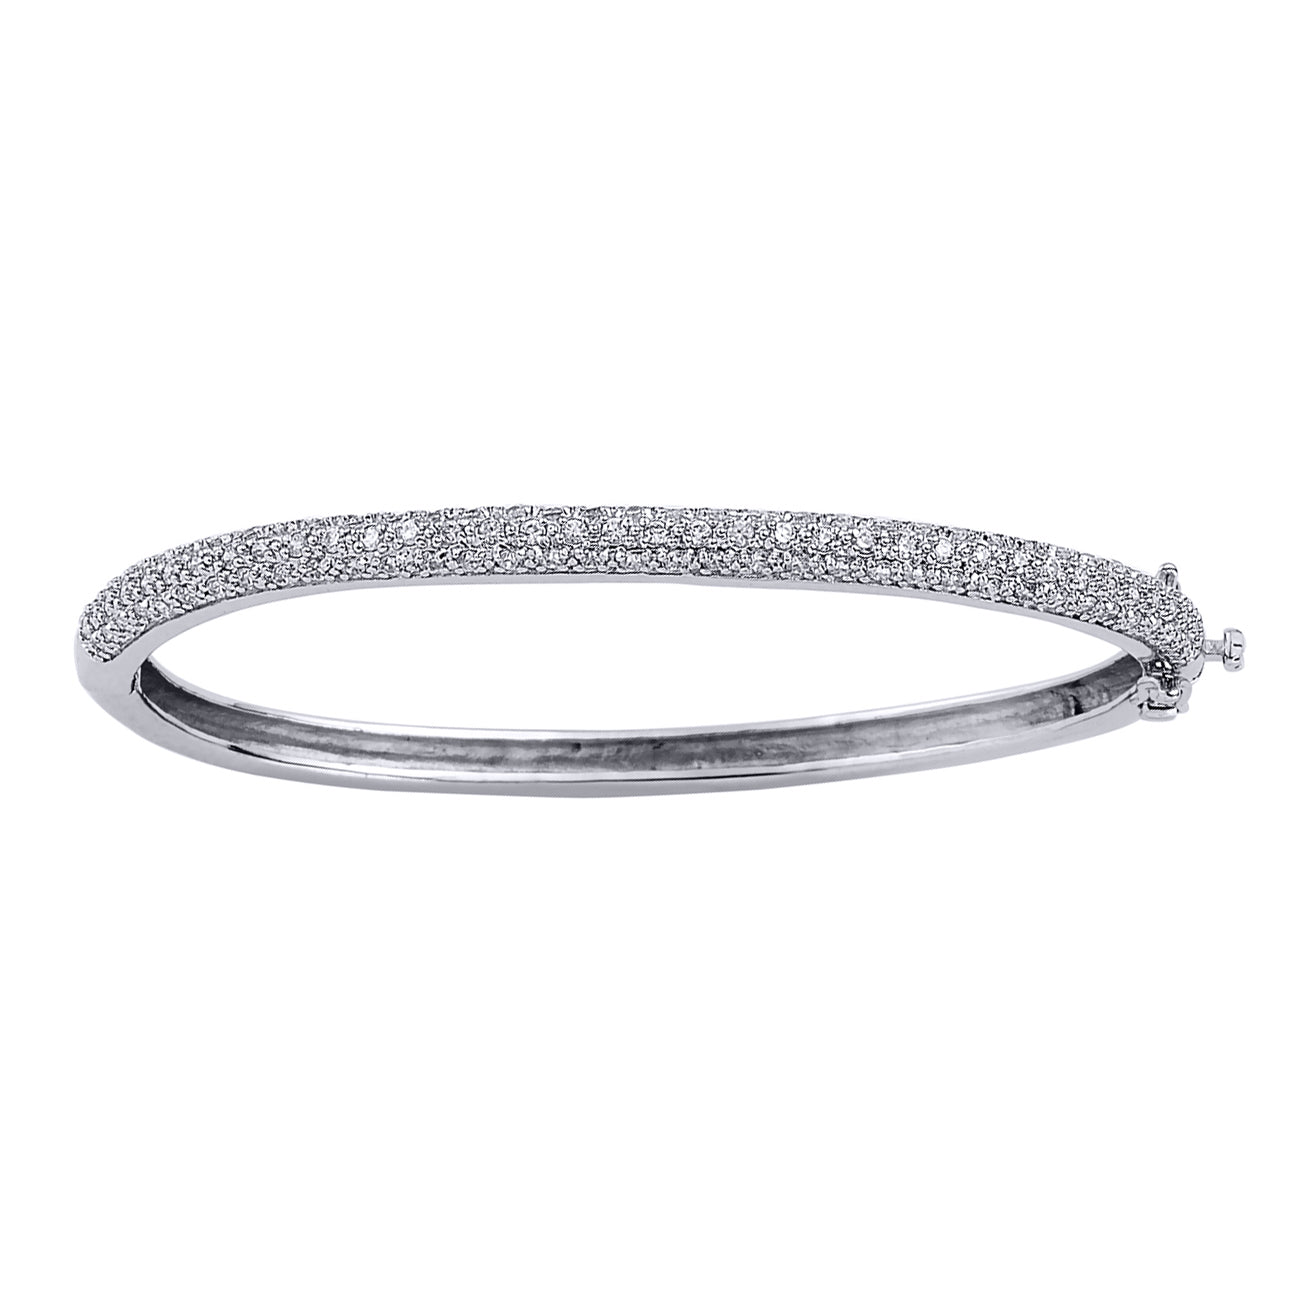 Ladies Sterling Silver  Pave CZ Hinged Domed Bangle Bracelet 4mm - GVG047